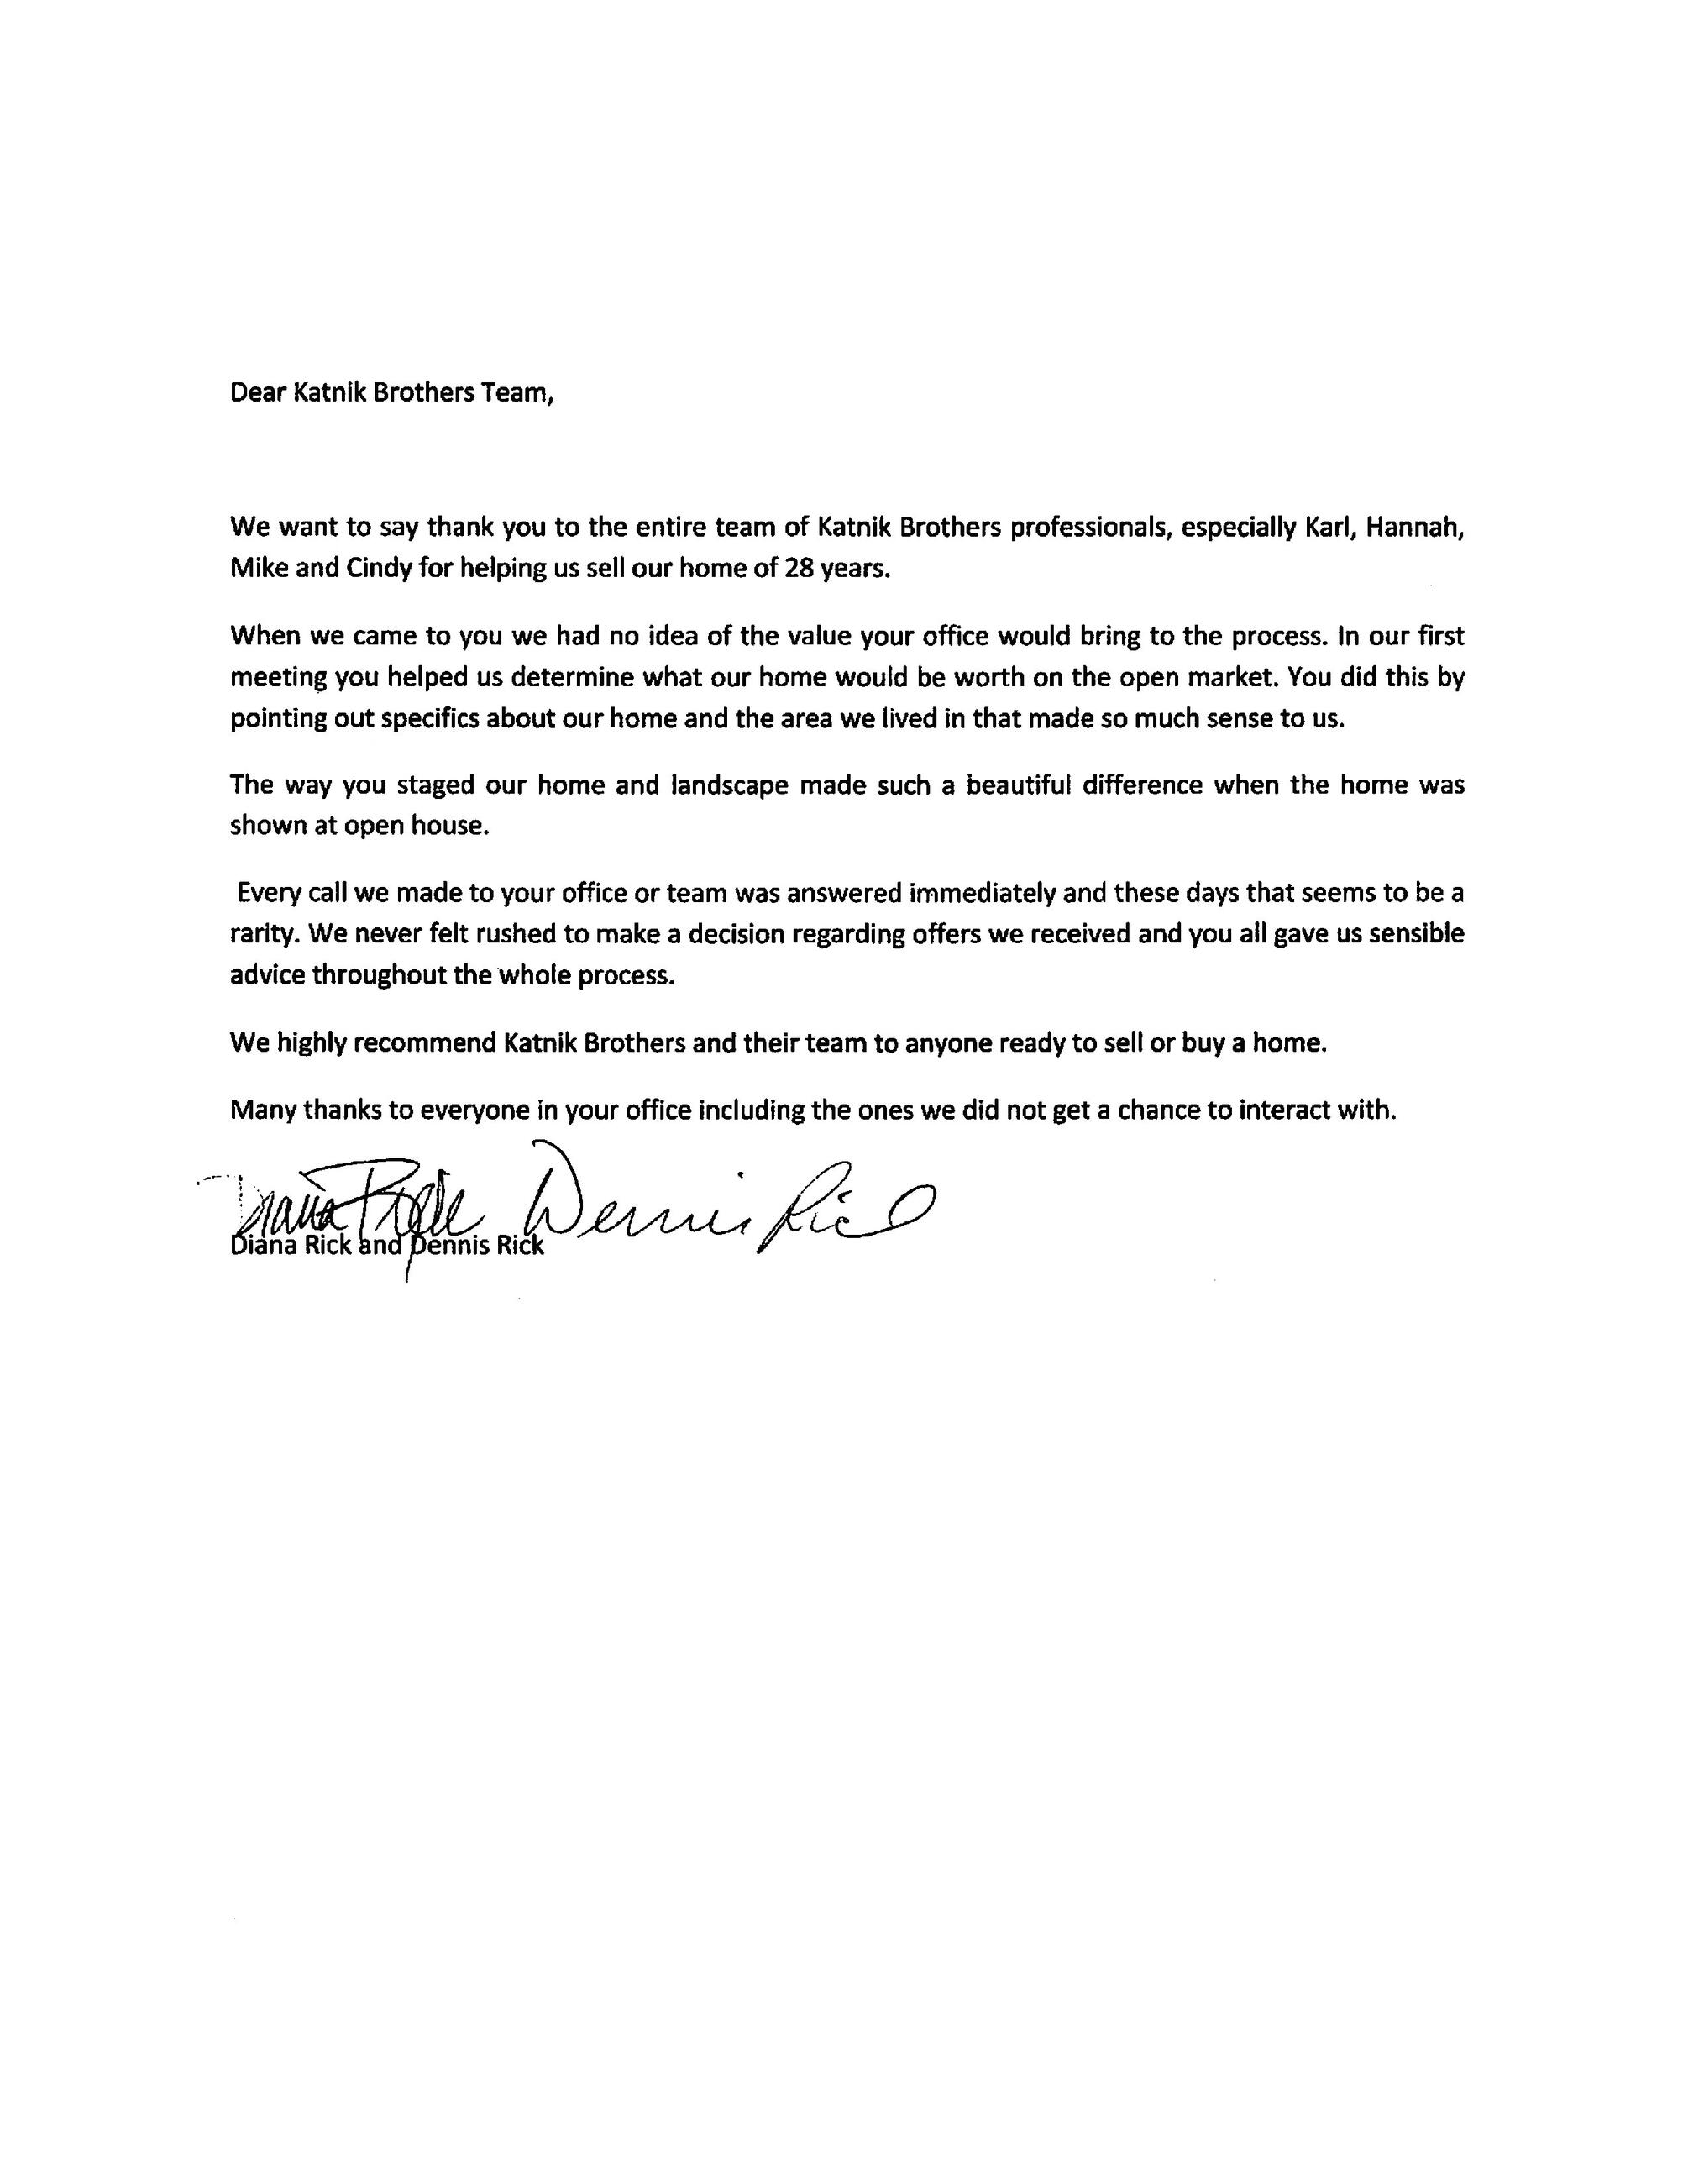 Diana Rick & Dennis Rick Family Letter